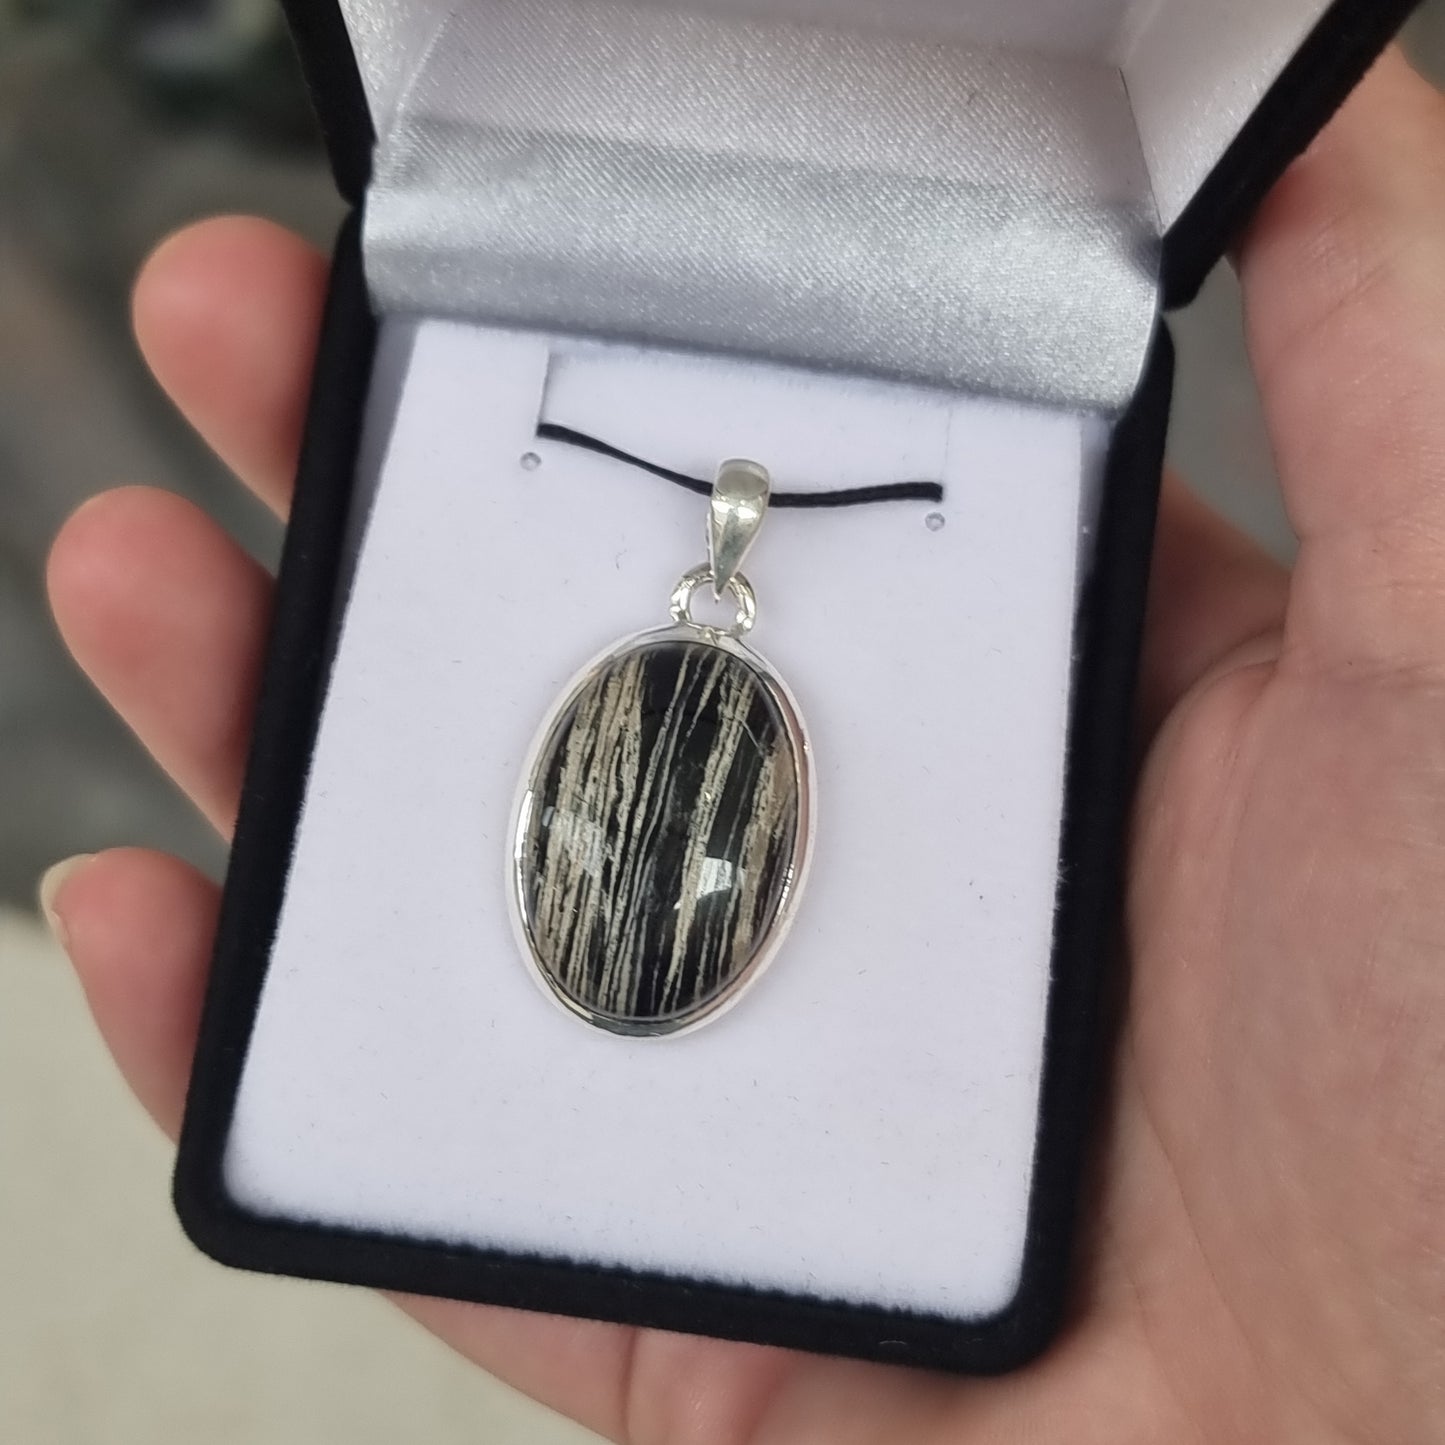 Zebra jasper pendant - Rivendell Shop